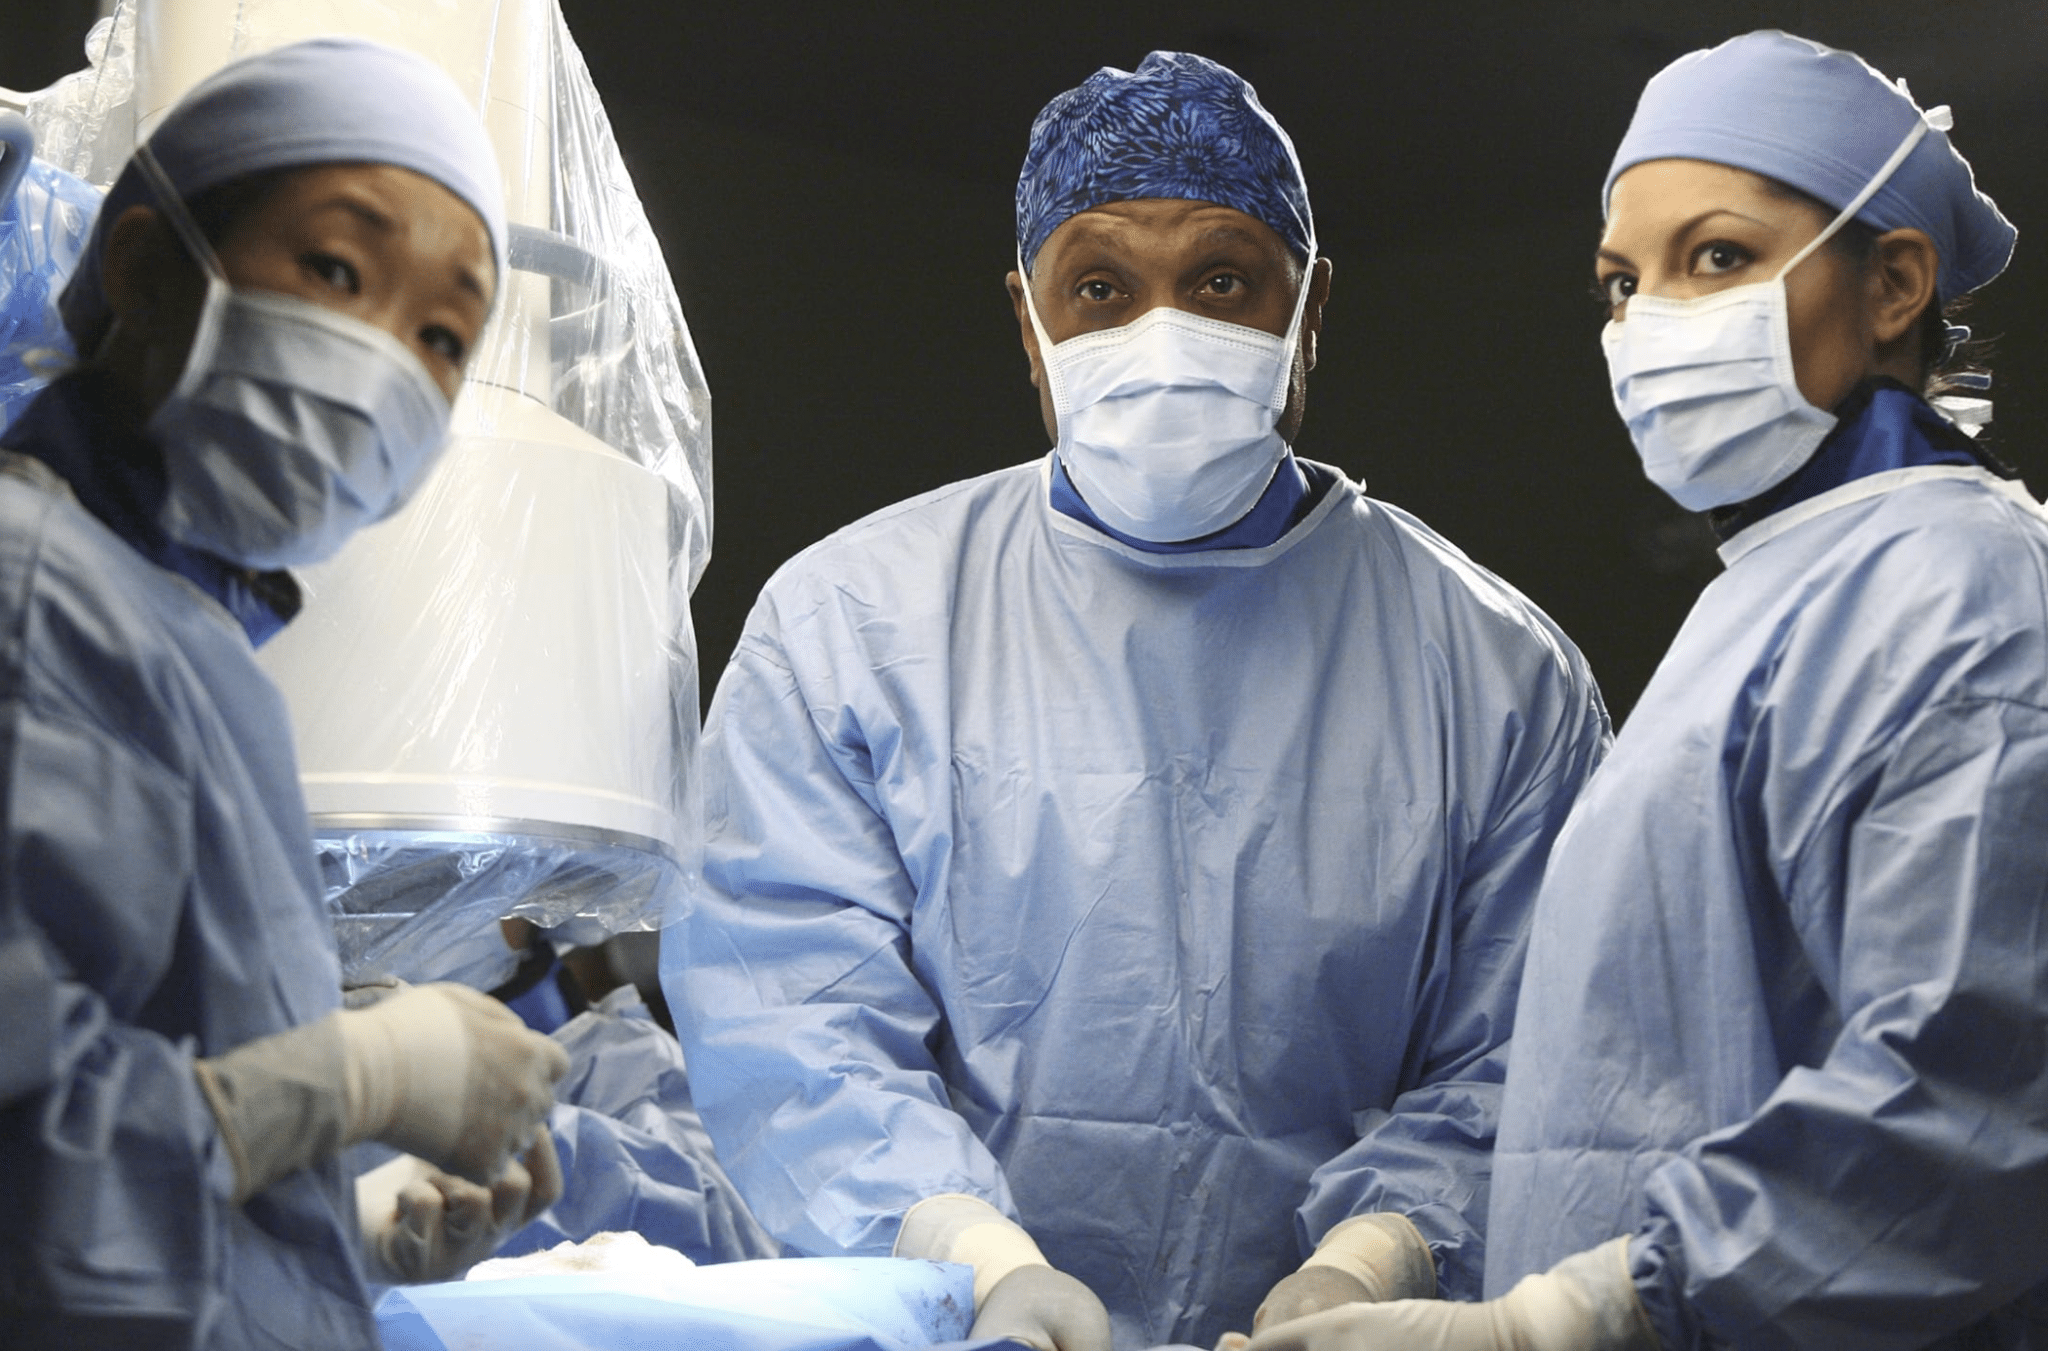 Grey's Anatomy Cast: Meet the Stars of the Hit Medical Drama